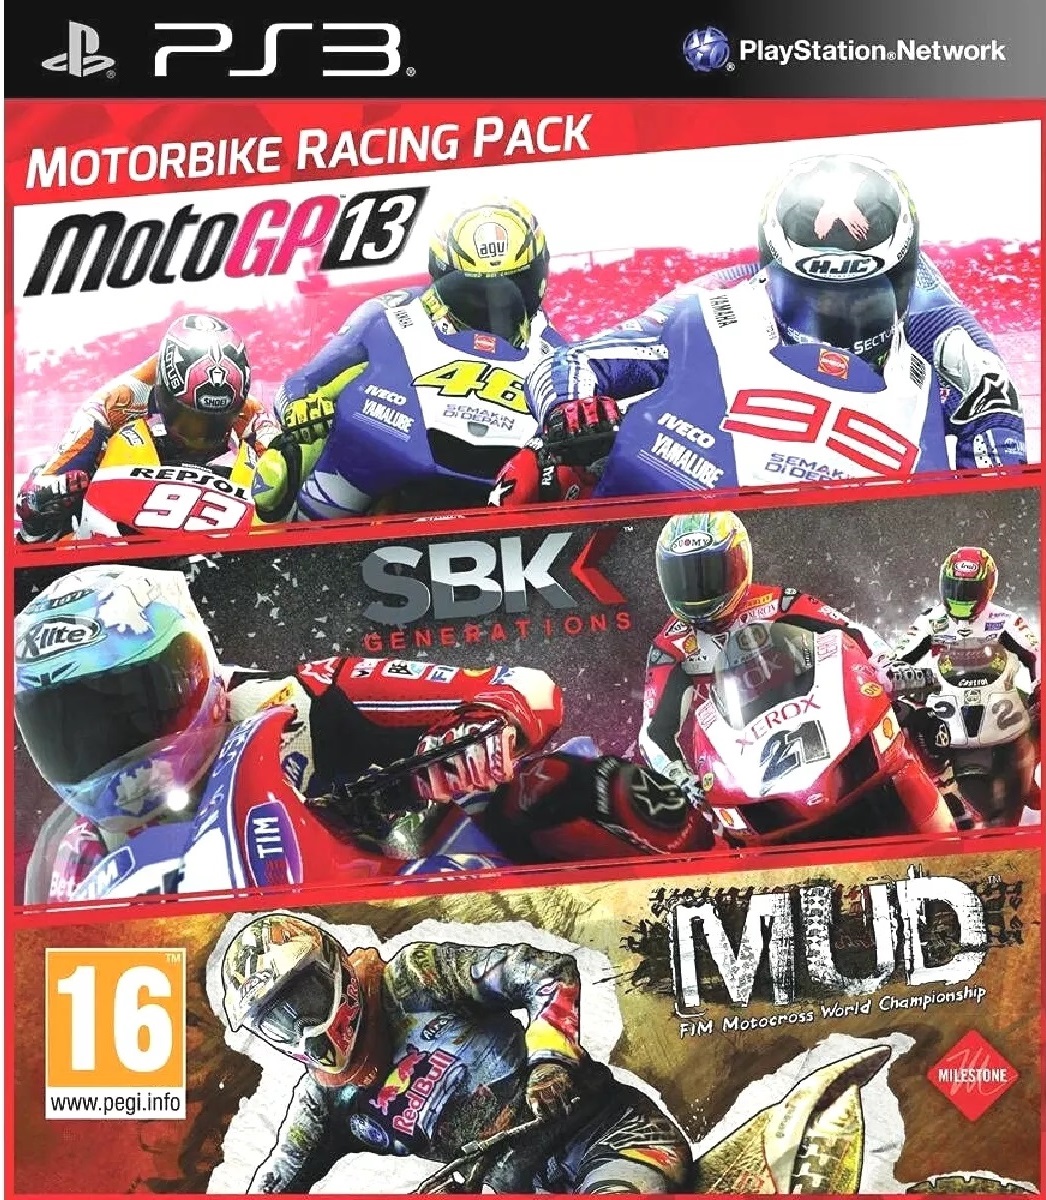 Joc PS3 Motorbike Racing Pack  ( Moto GP 13 + SBK generations + MUD ) - EAN: 8059617102685